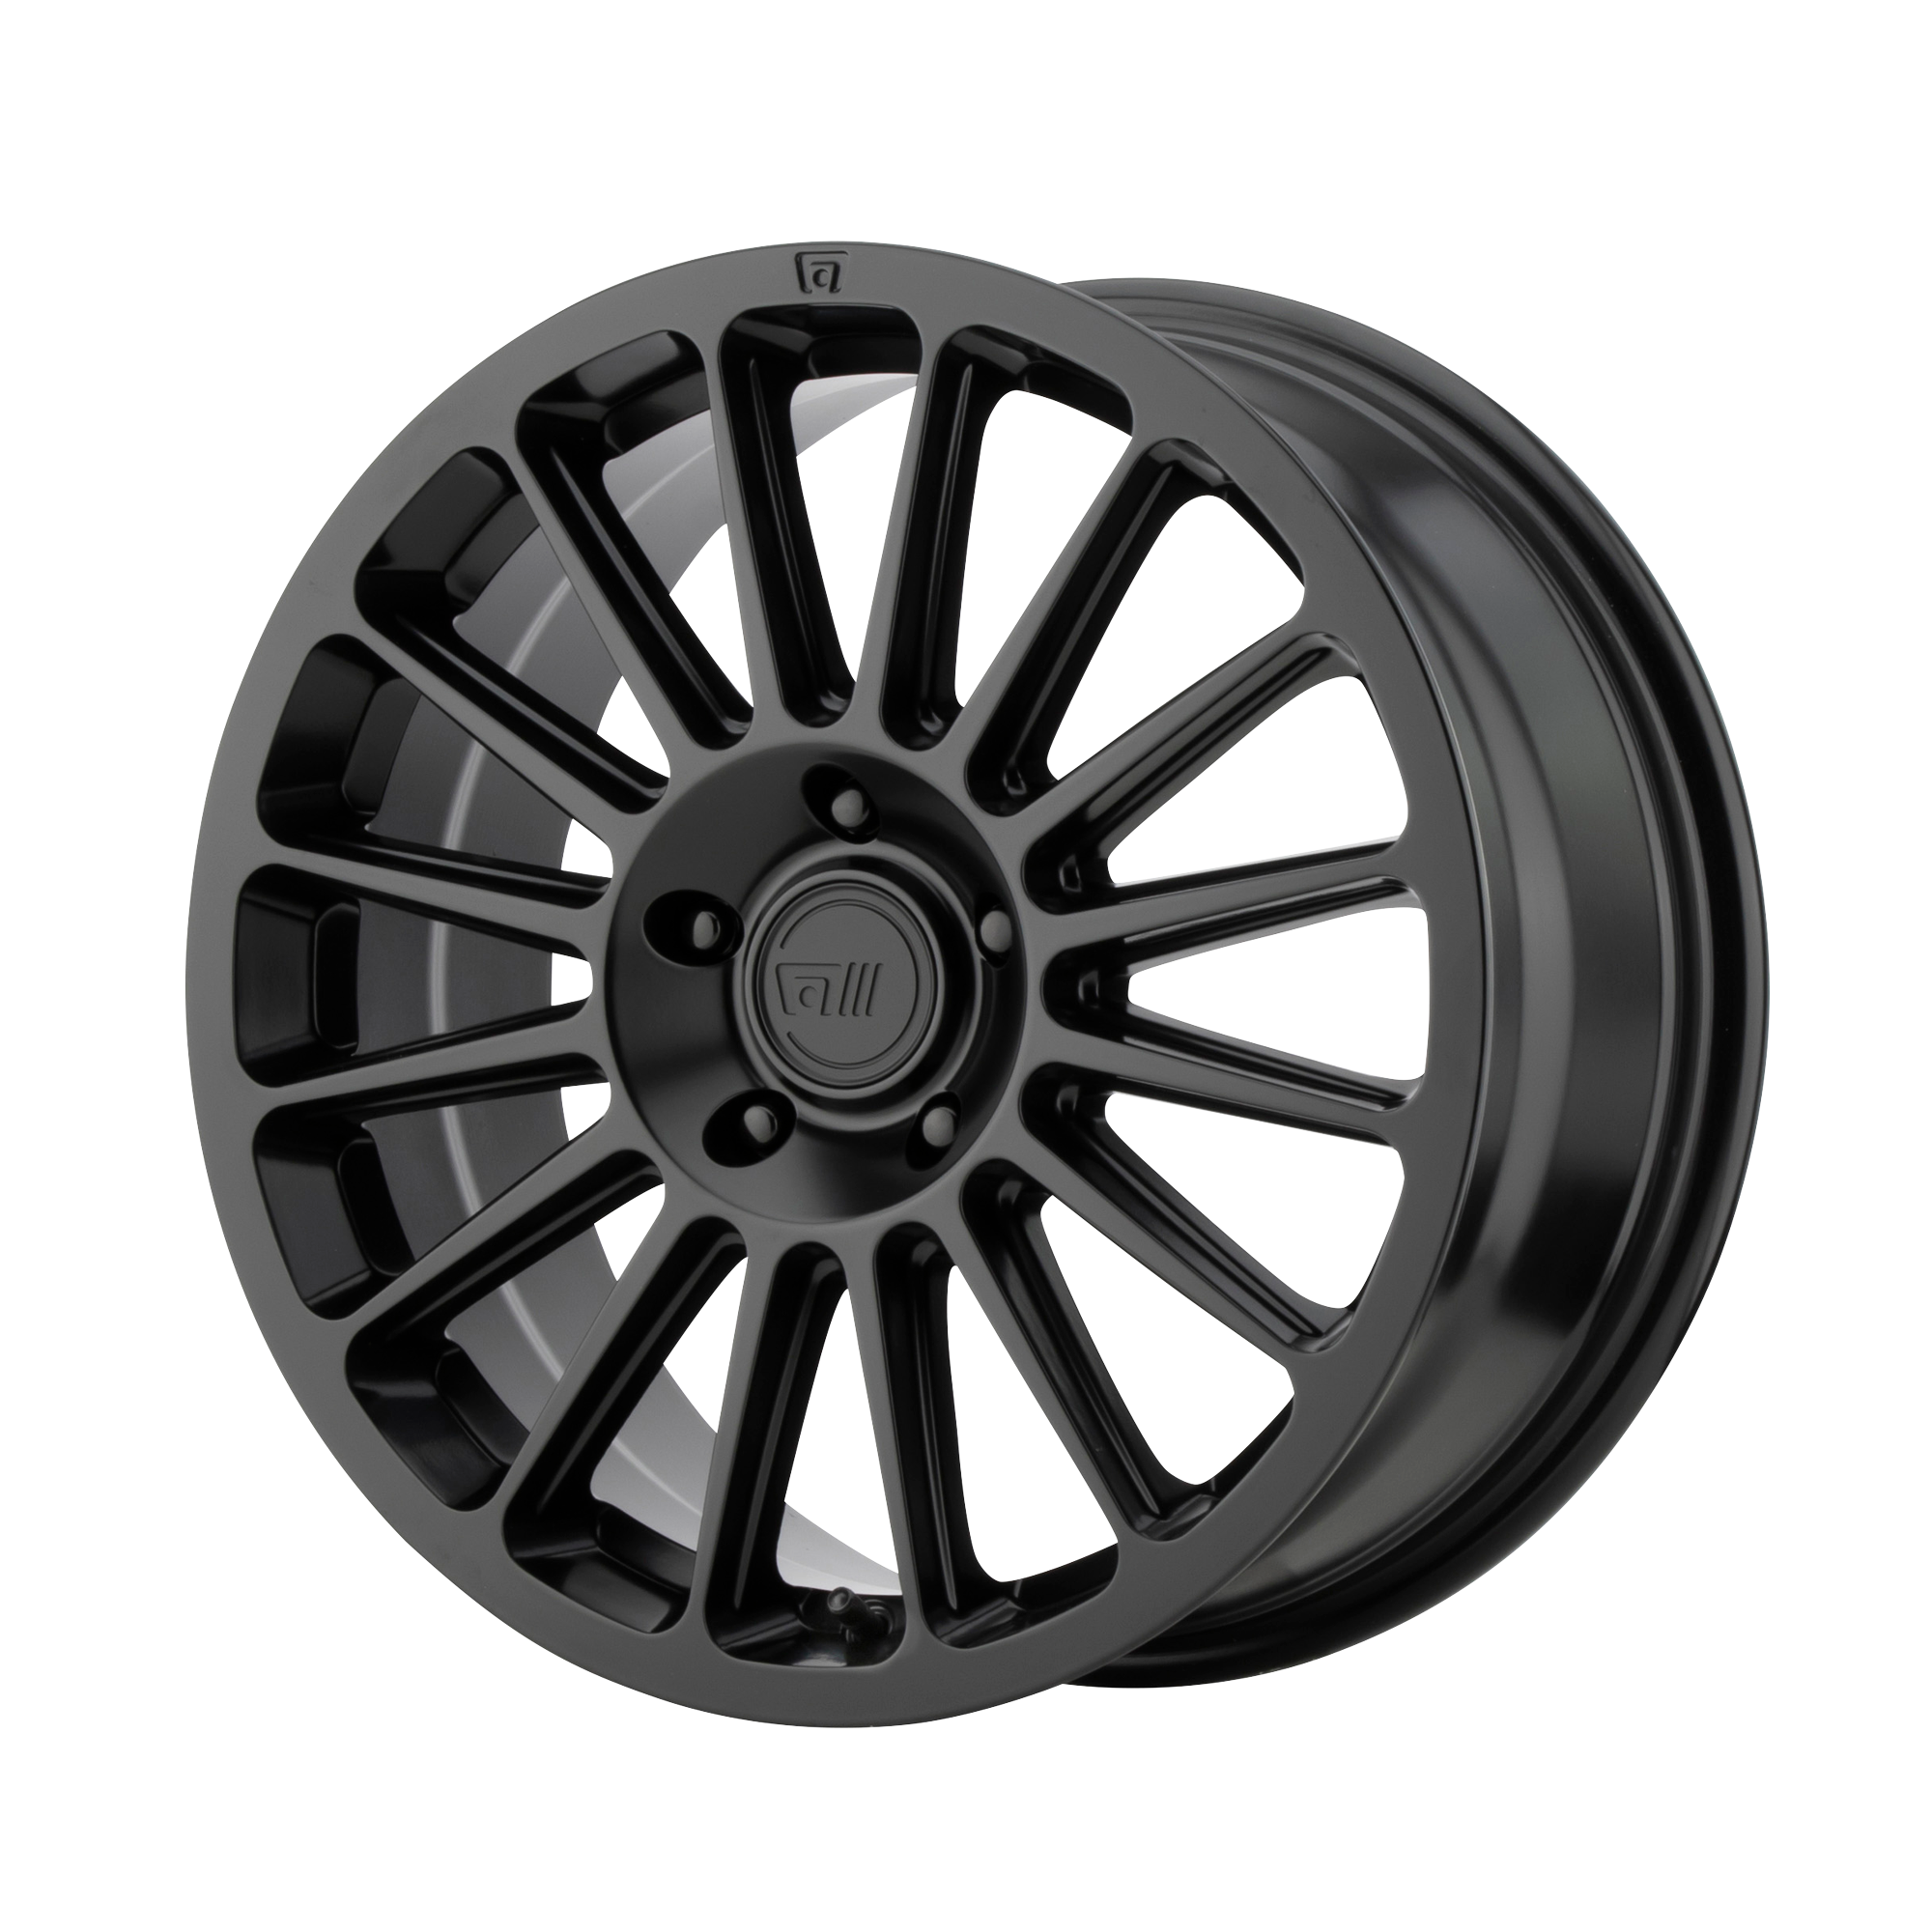 MR141 17x7.5 5x100.00 SATIN BLACK (40 mm) - Tires and Engine Performance